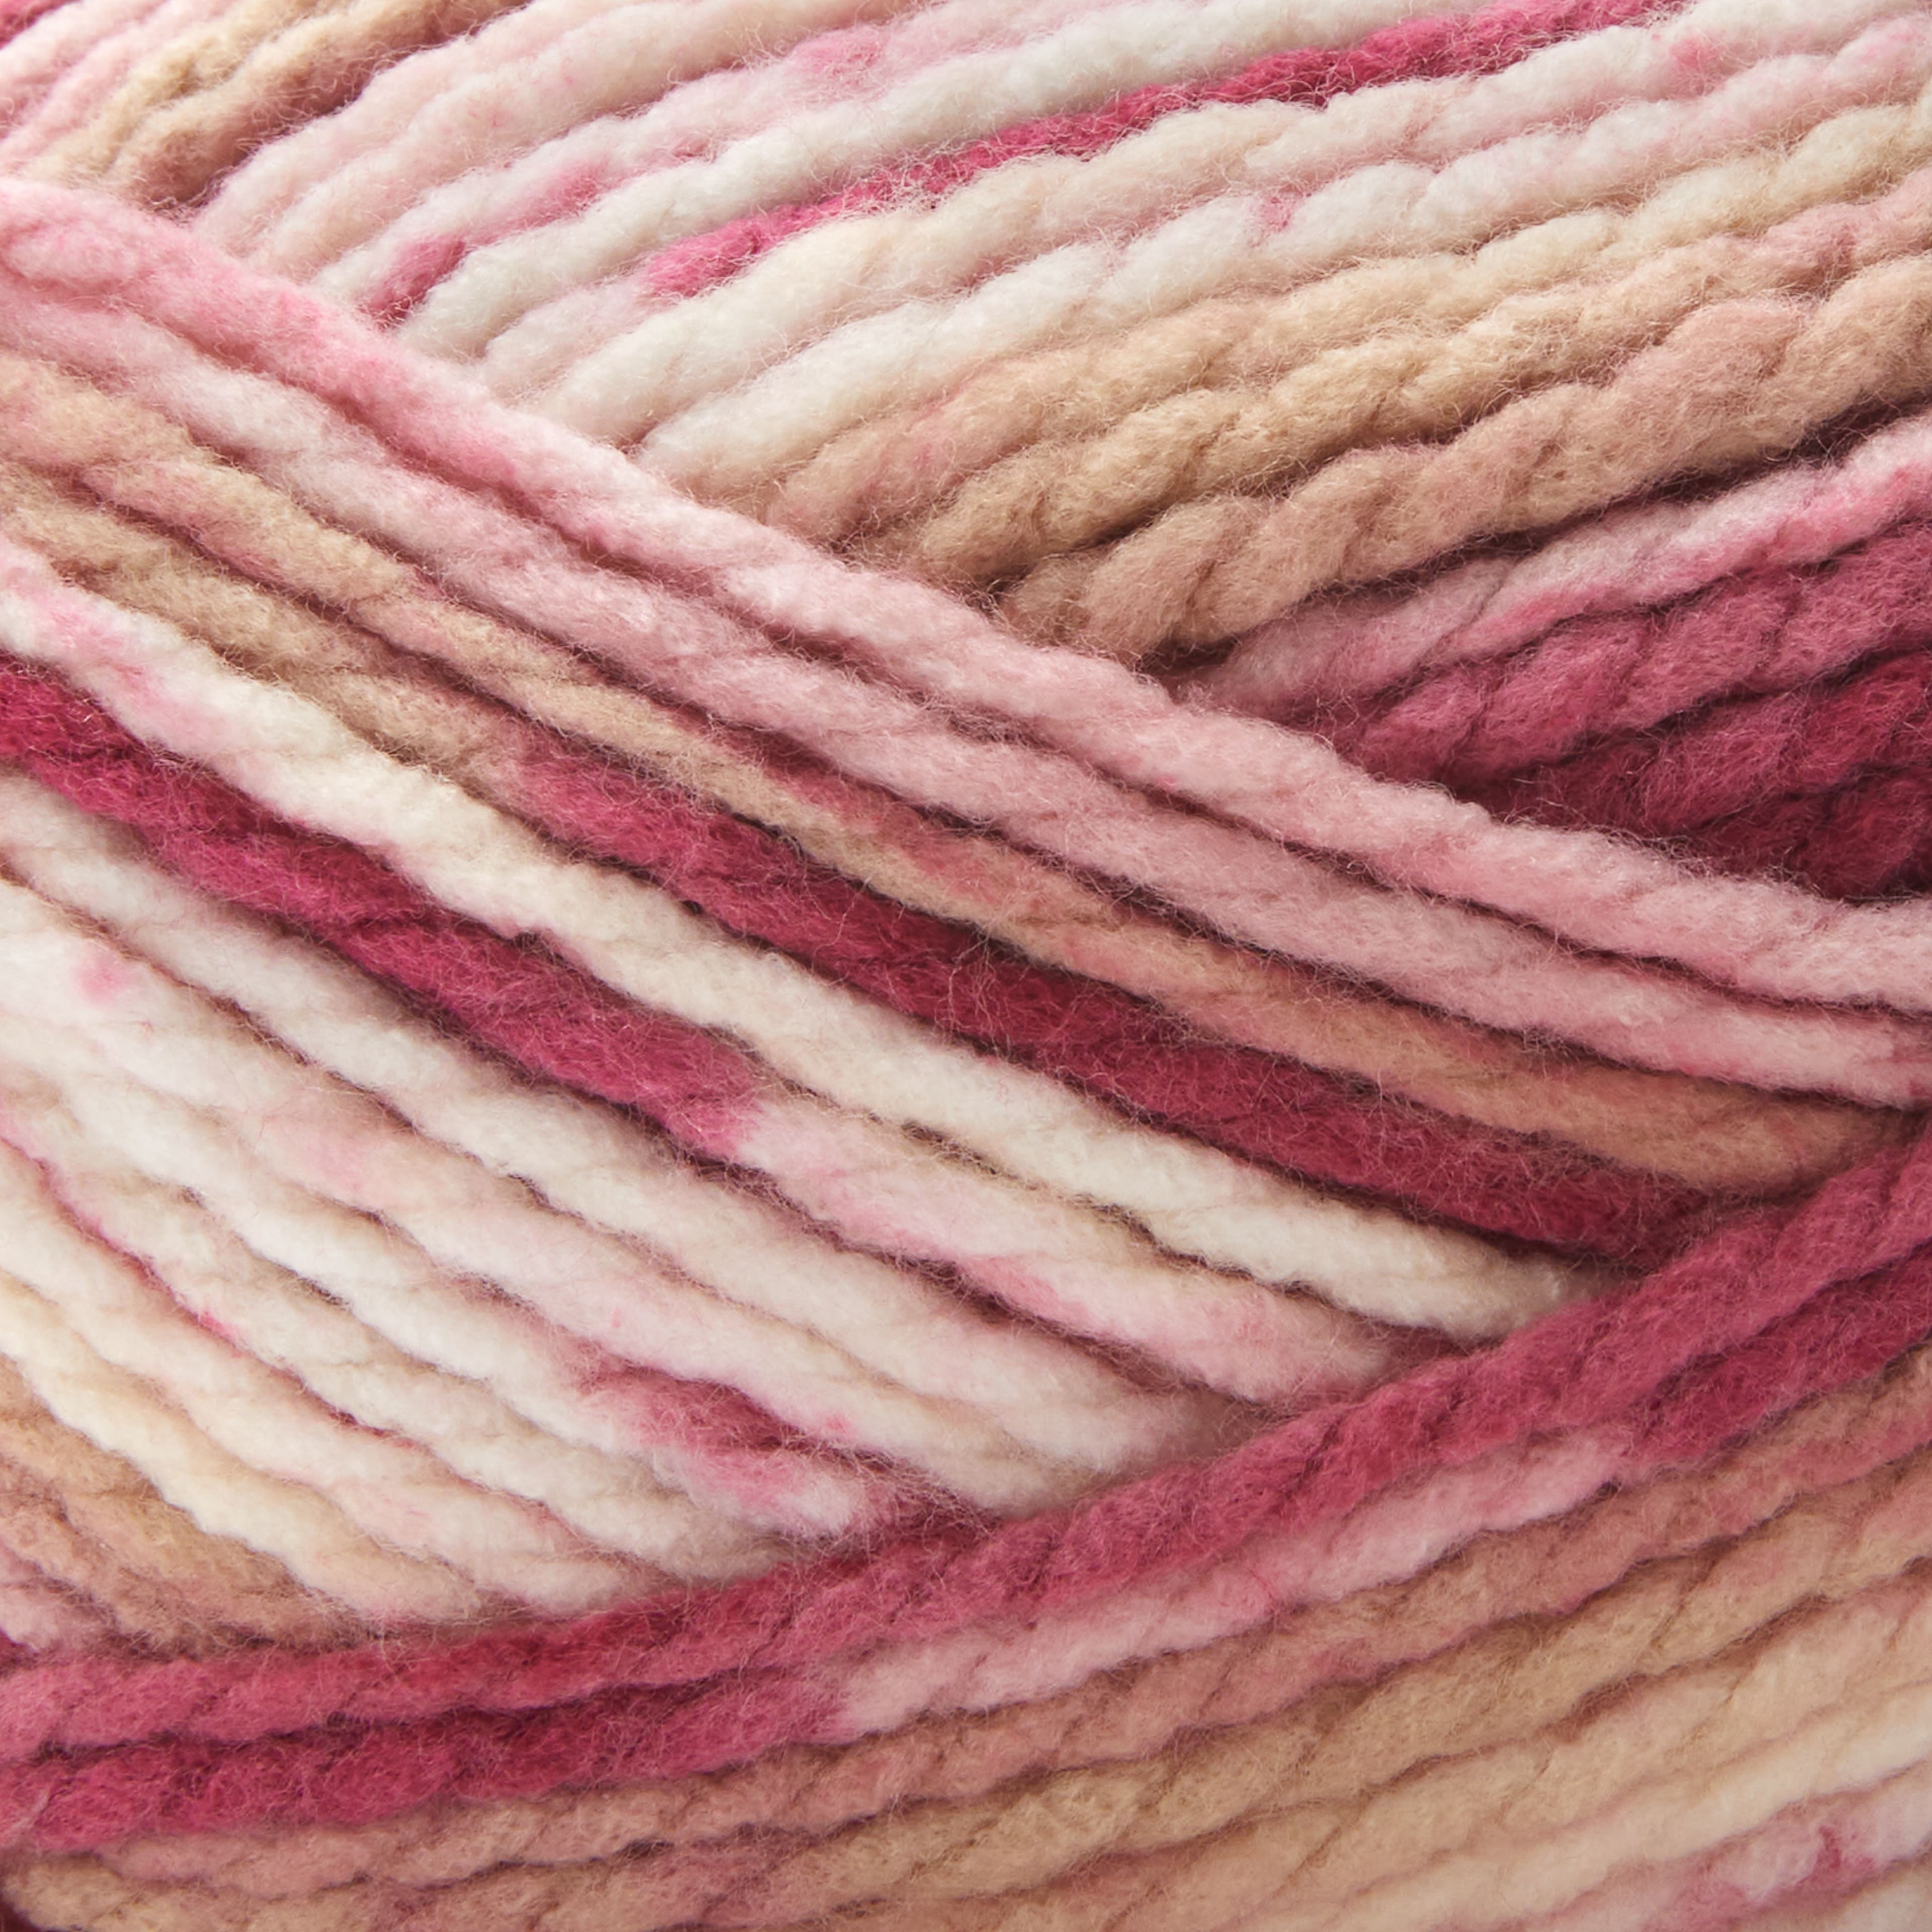 Loops & Threads charisma yarn by loops & threads - sapphire - 109 yds - 3.5  oz. - #632449